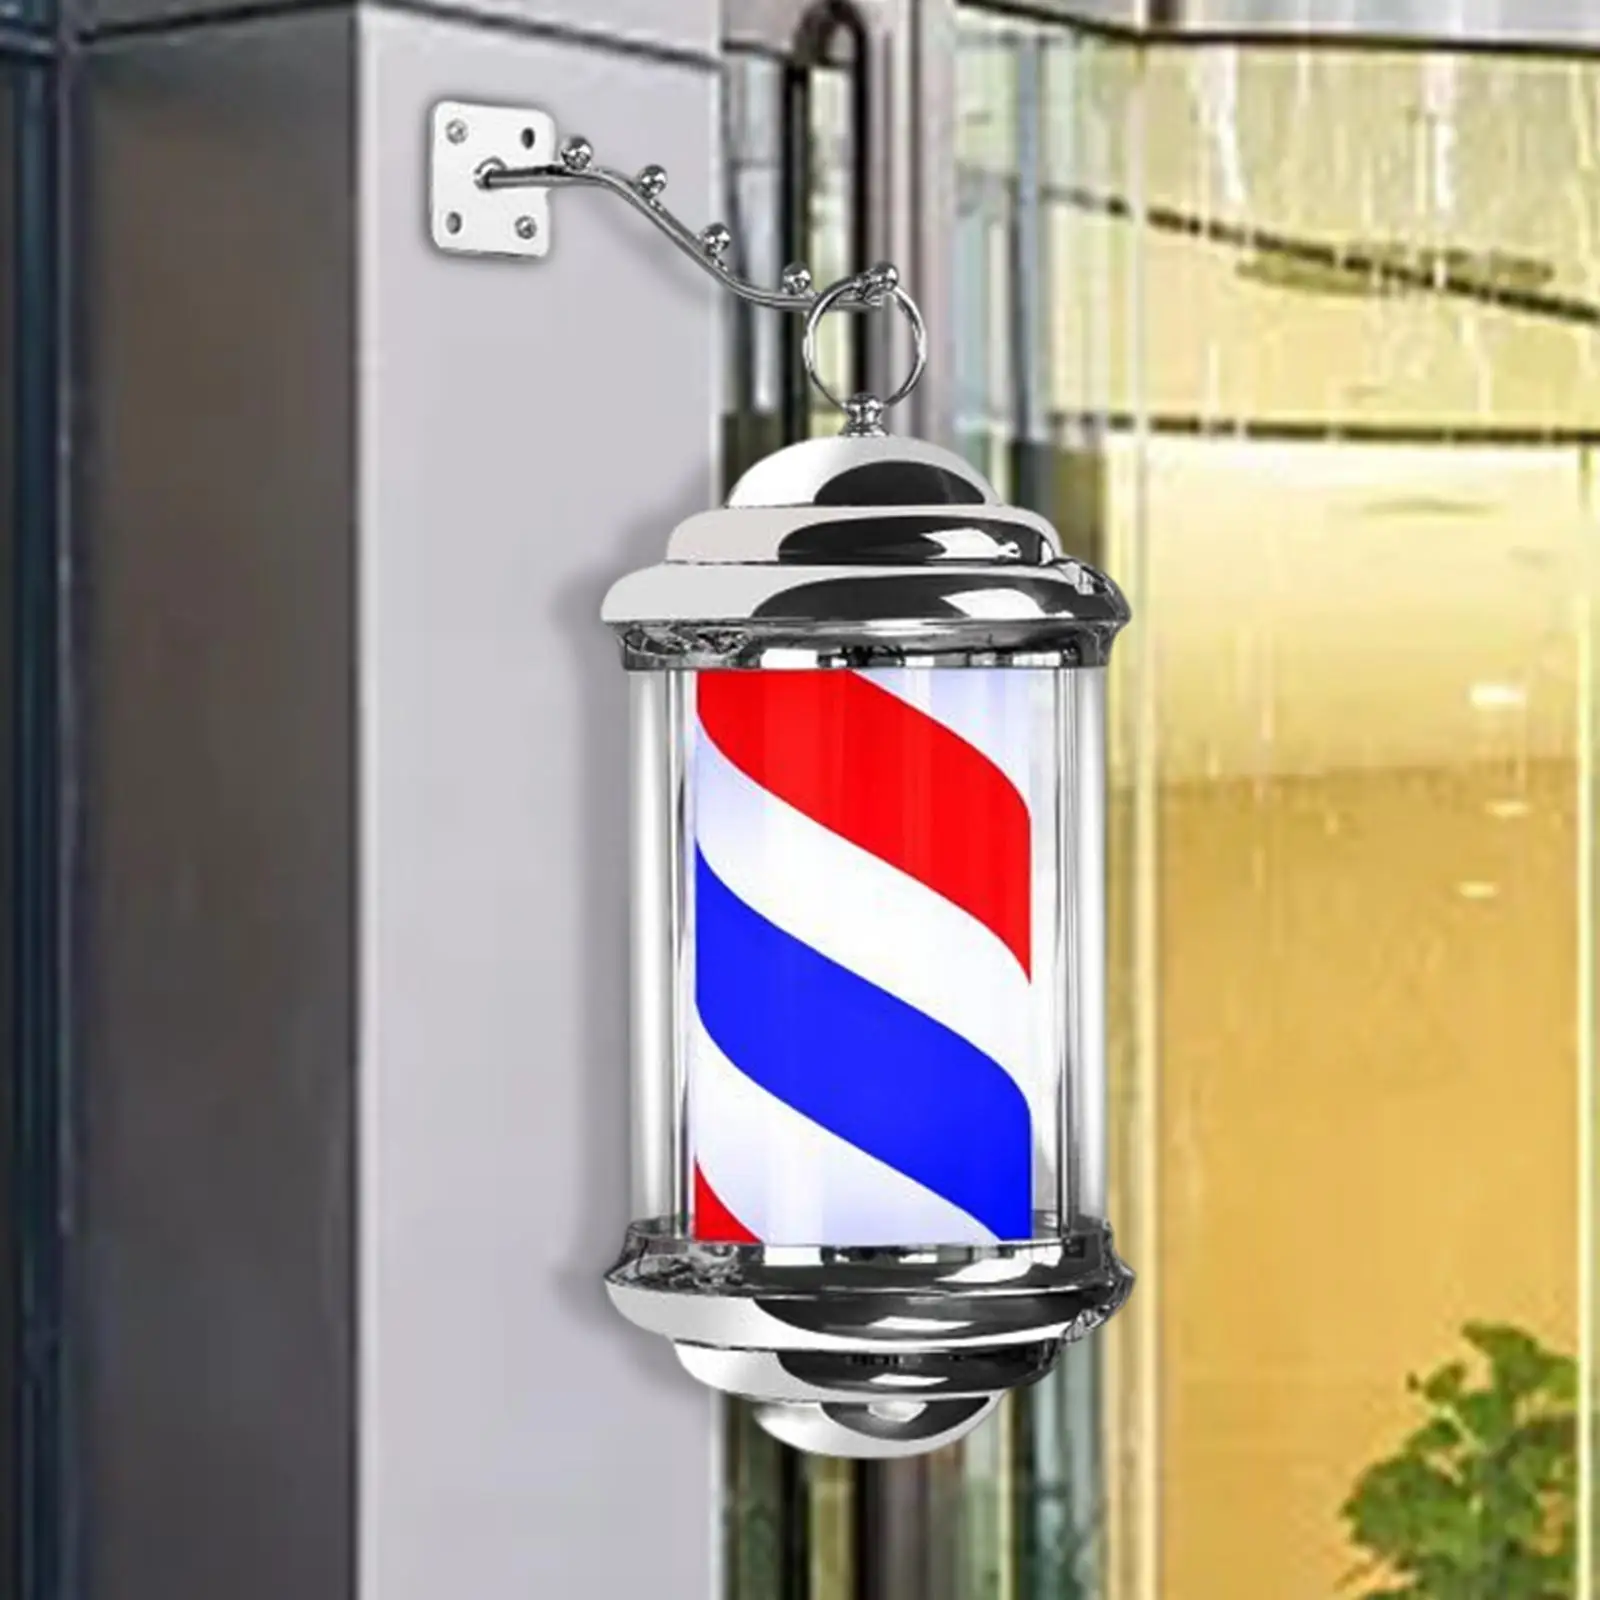 Barber Pole Light Stripes Rotating Hair Salon Shop Sign Light Classic Novelty Lighting Windproof LED Lamp for Beauty Salon Party